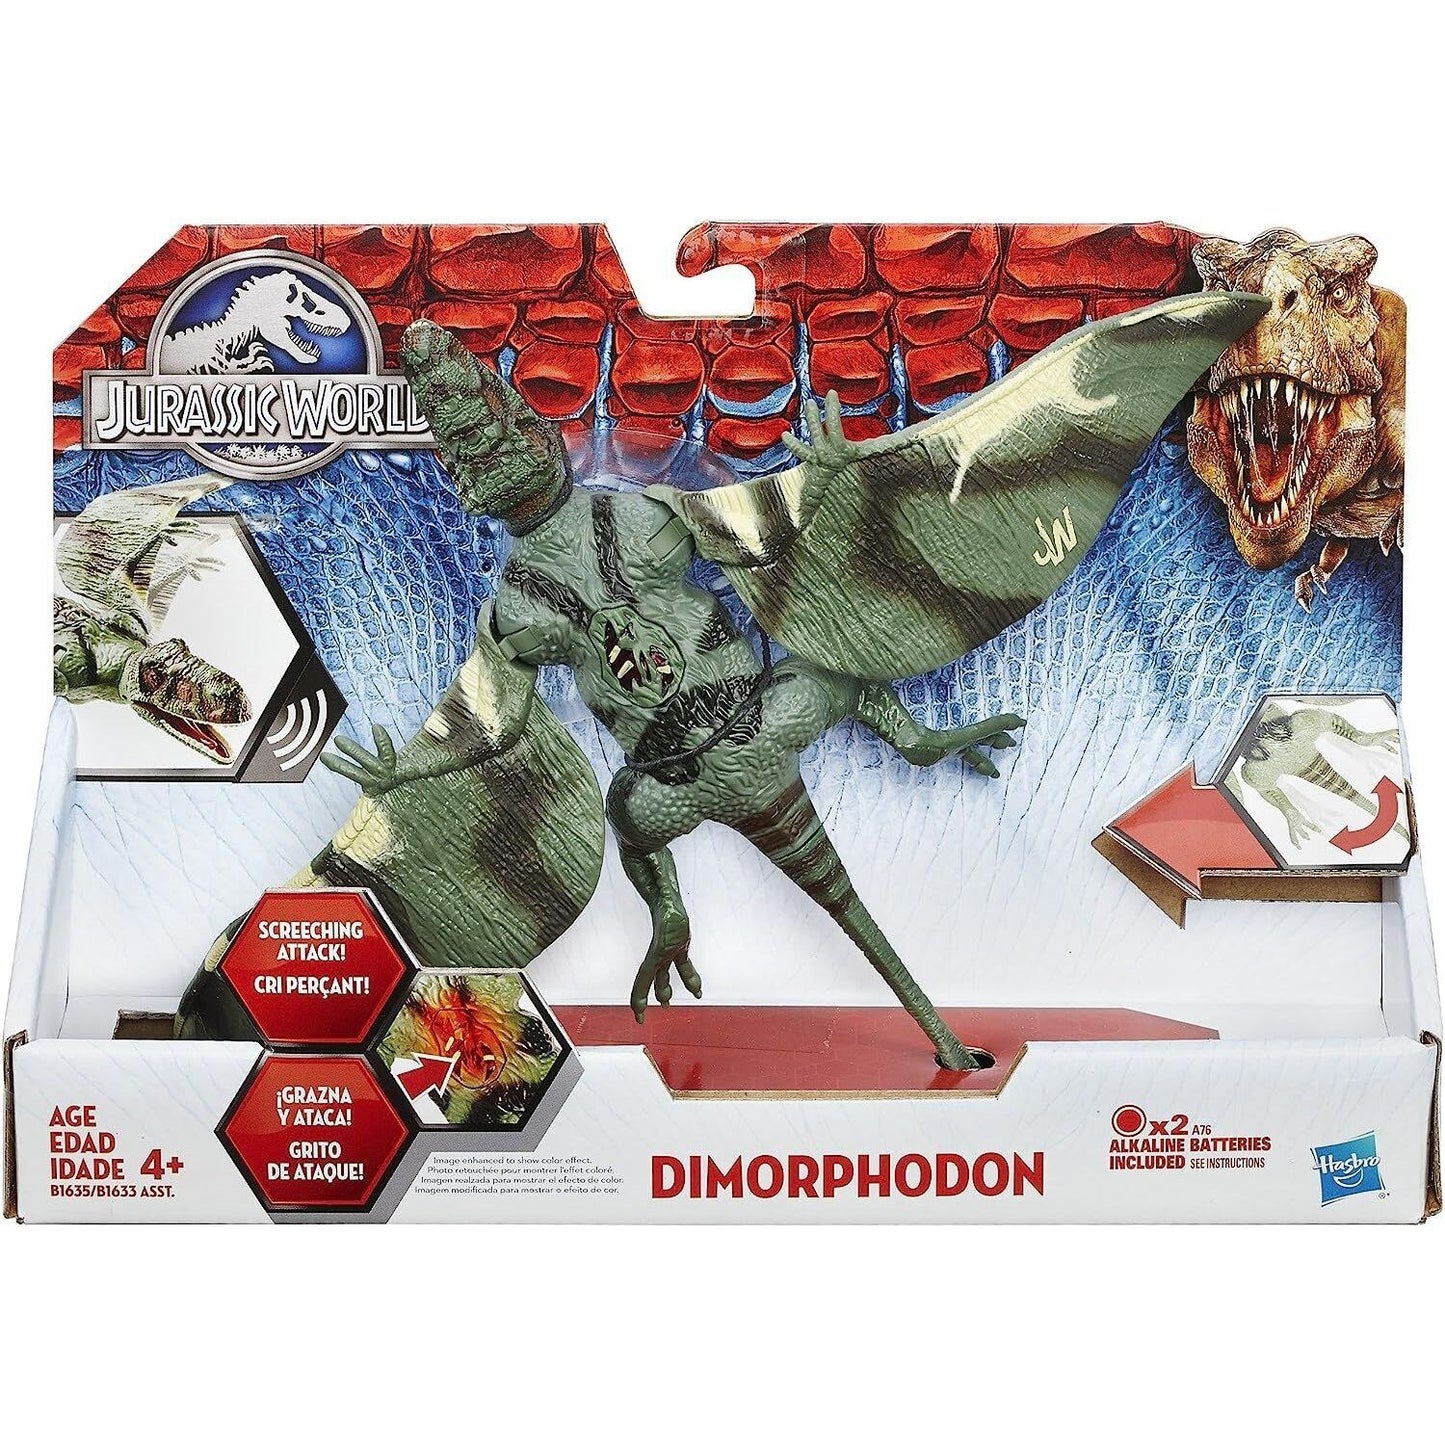 Jurassic World Dinosaur Toy - Dimorphodon